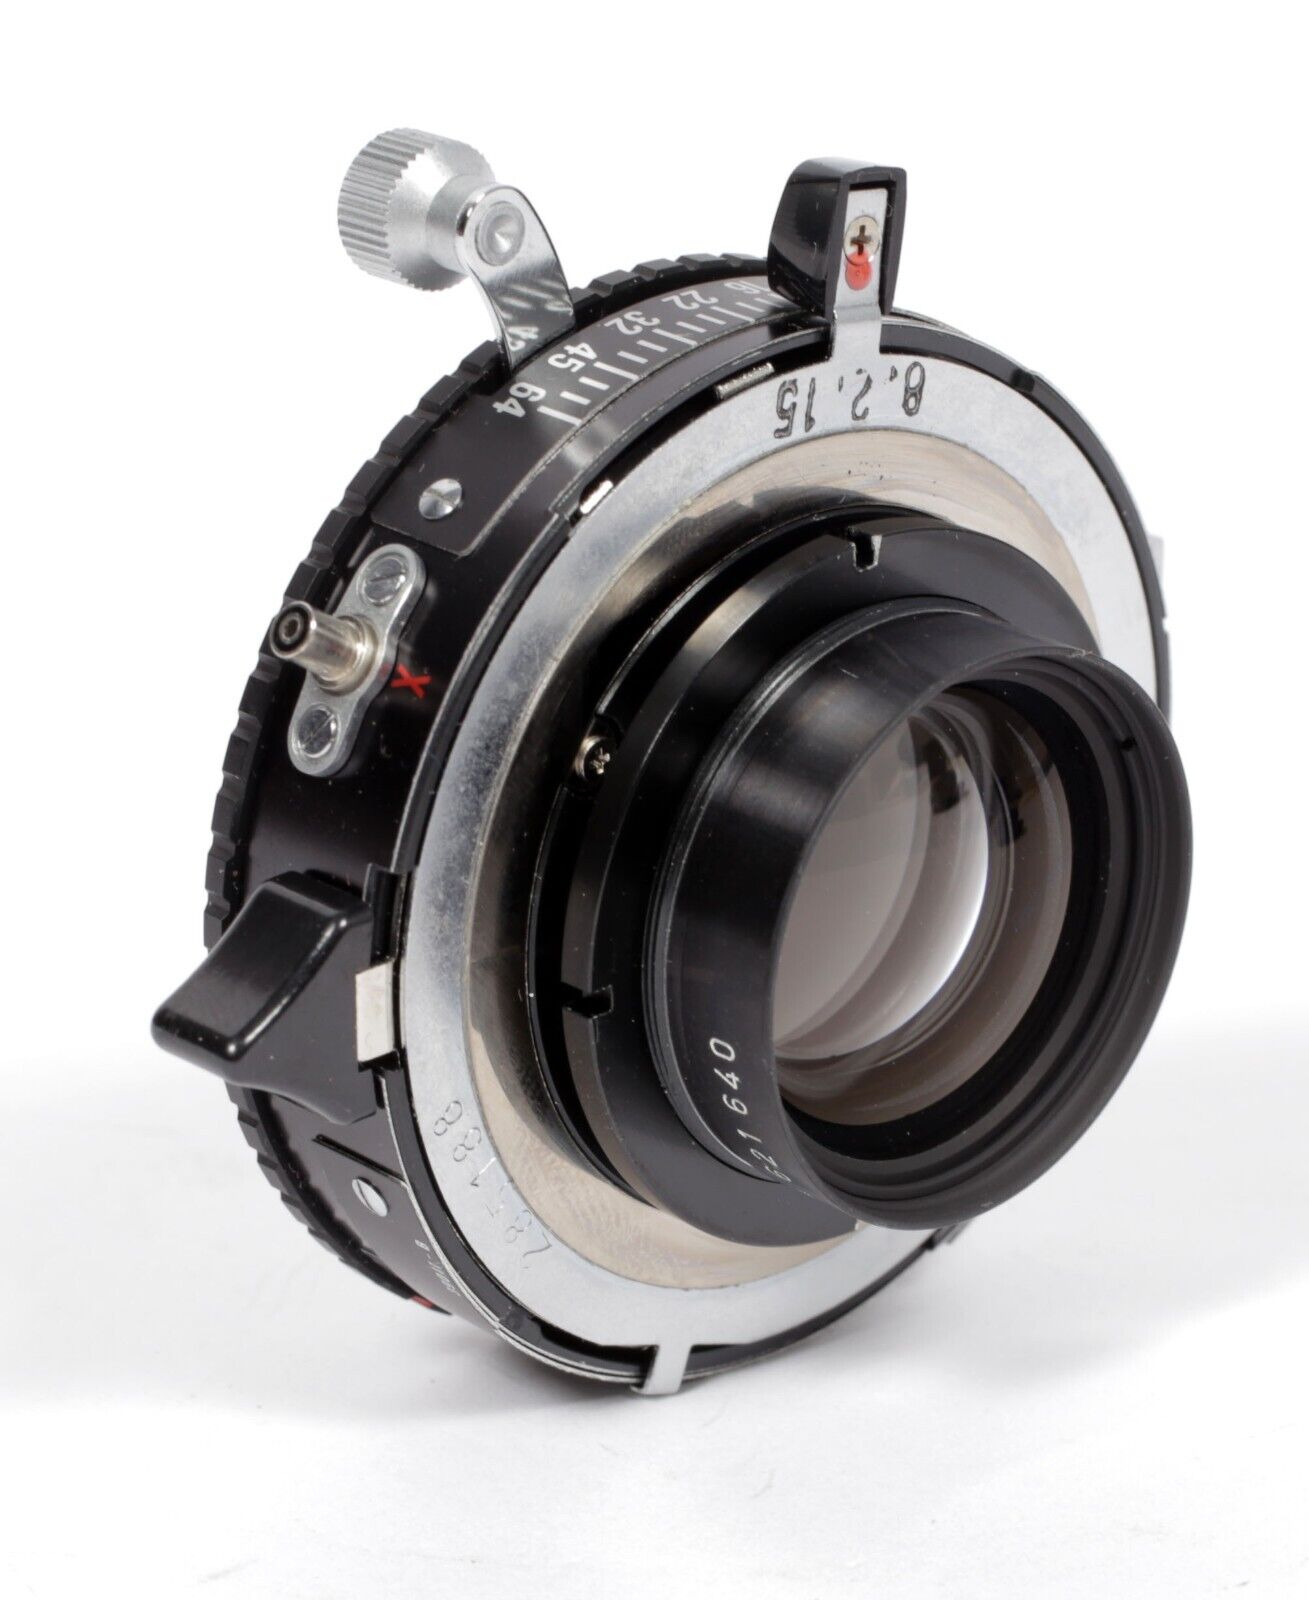 Schneider G-Claron 150mm F9 Lens in Copal #0 Shutter #640 | CatLABS